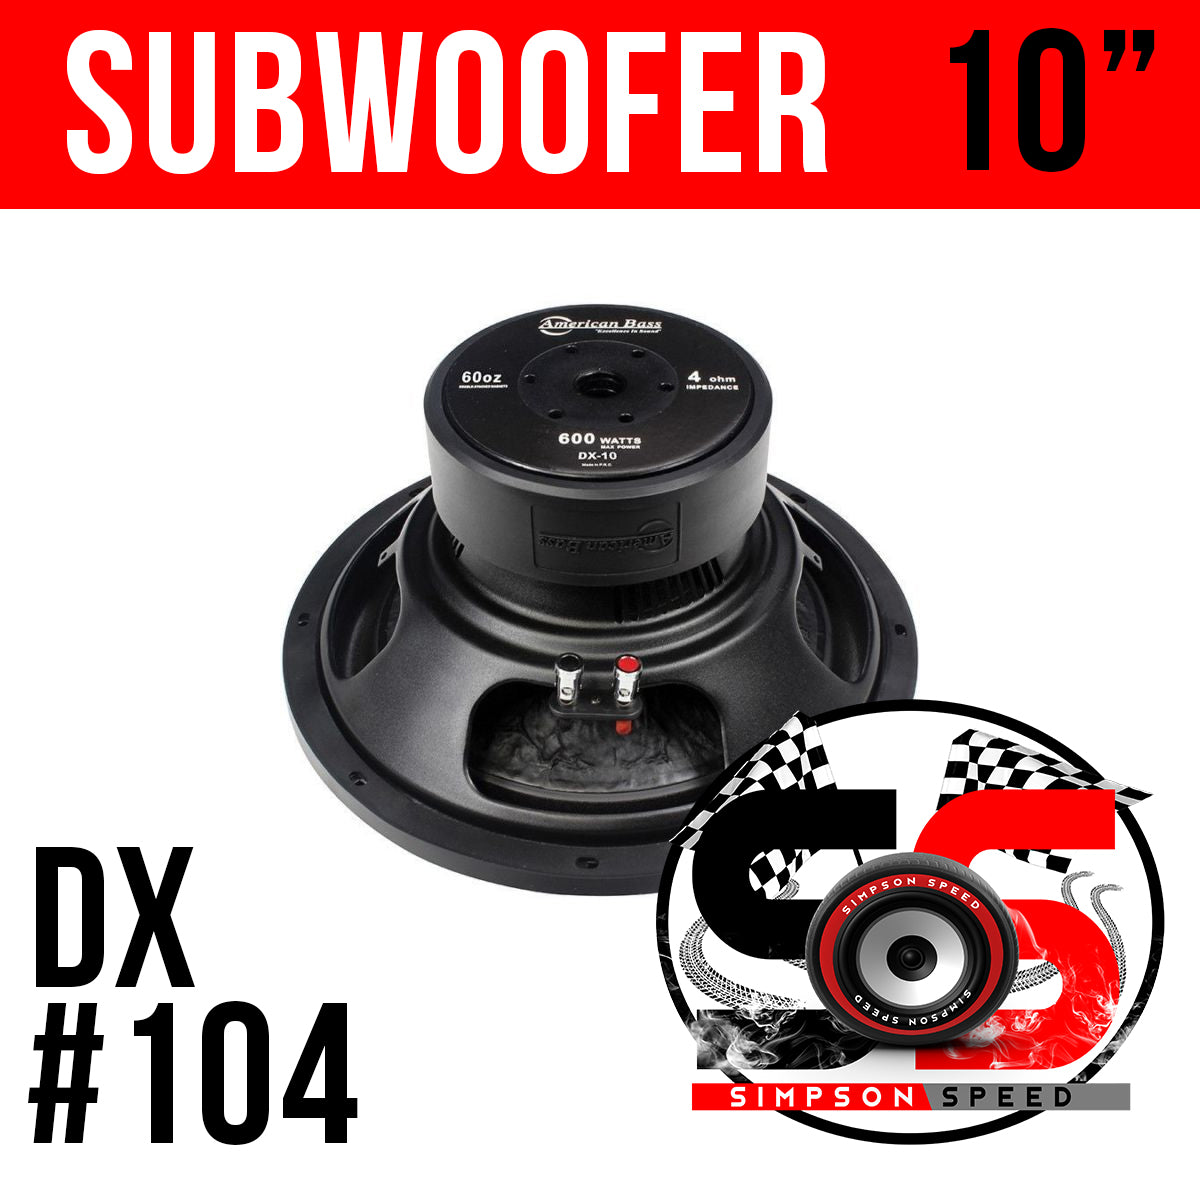 DX 10 American Bass Subwoofer